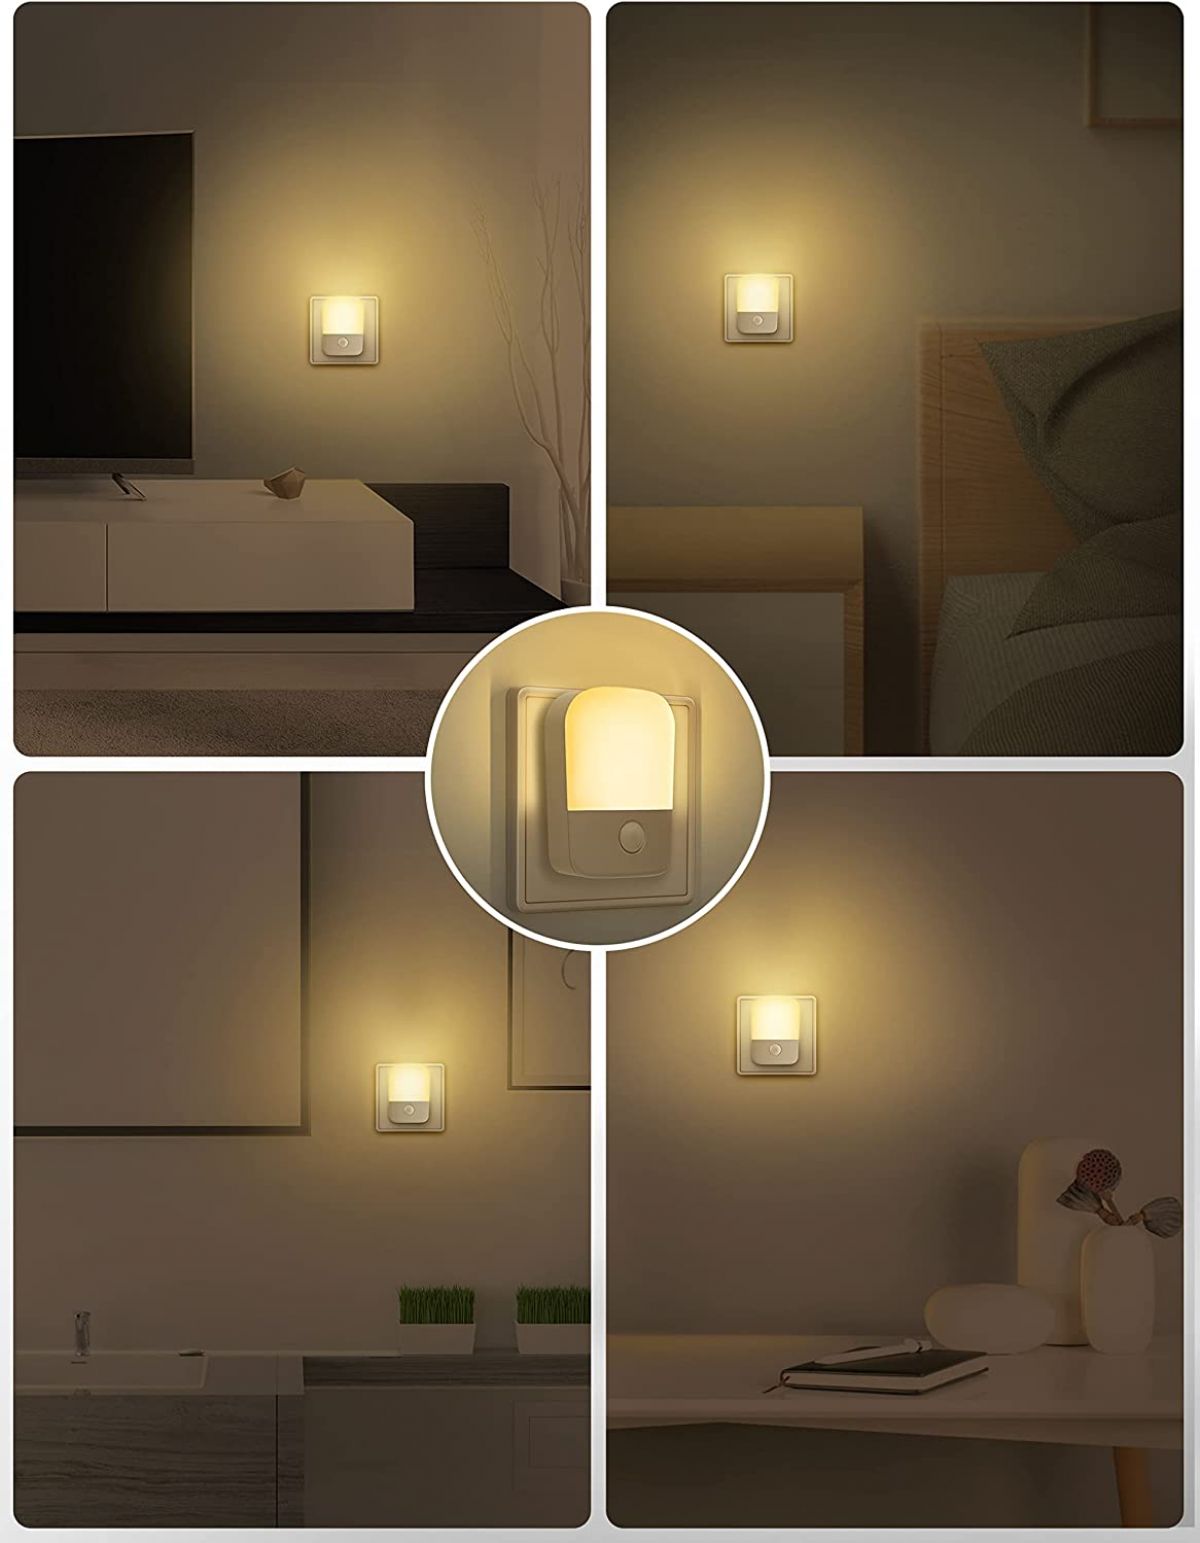 LED night light with sensor 0.6 W, Fulighture ( 2pcs )